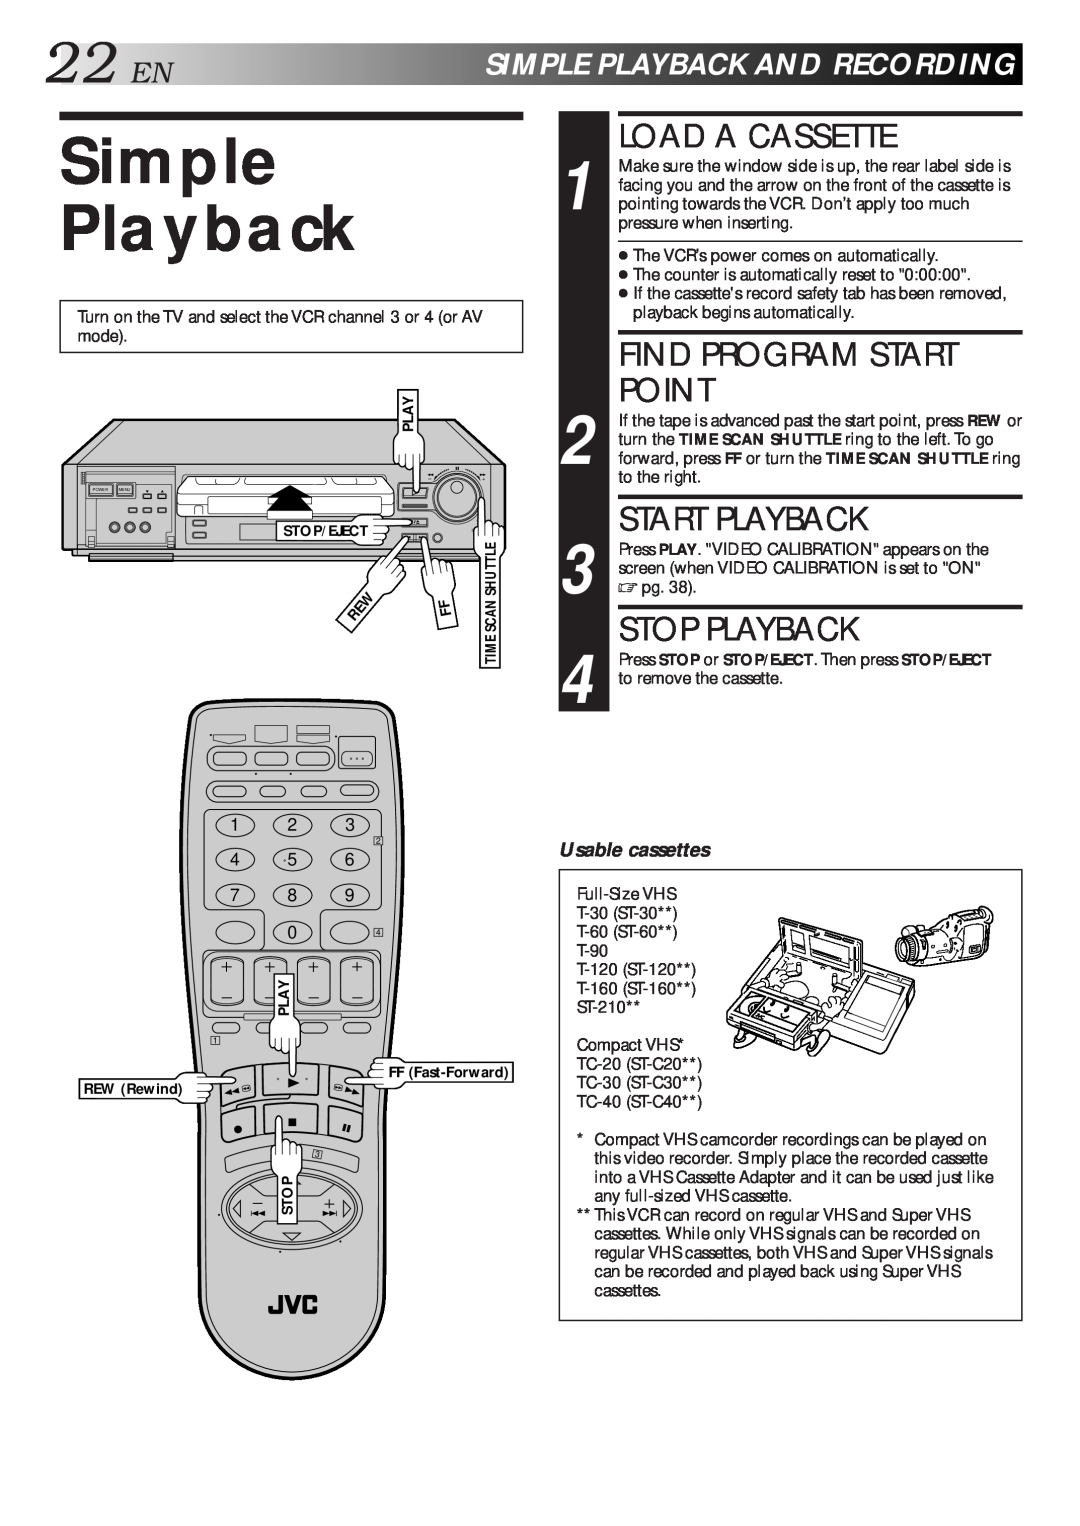 JVC HR-S7500U manual Simple Playback, 22EN, Load A Cassette, Find Program Start Point, Start Playback, Stop Playback 